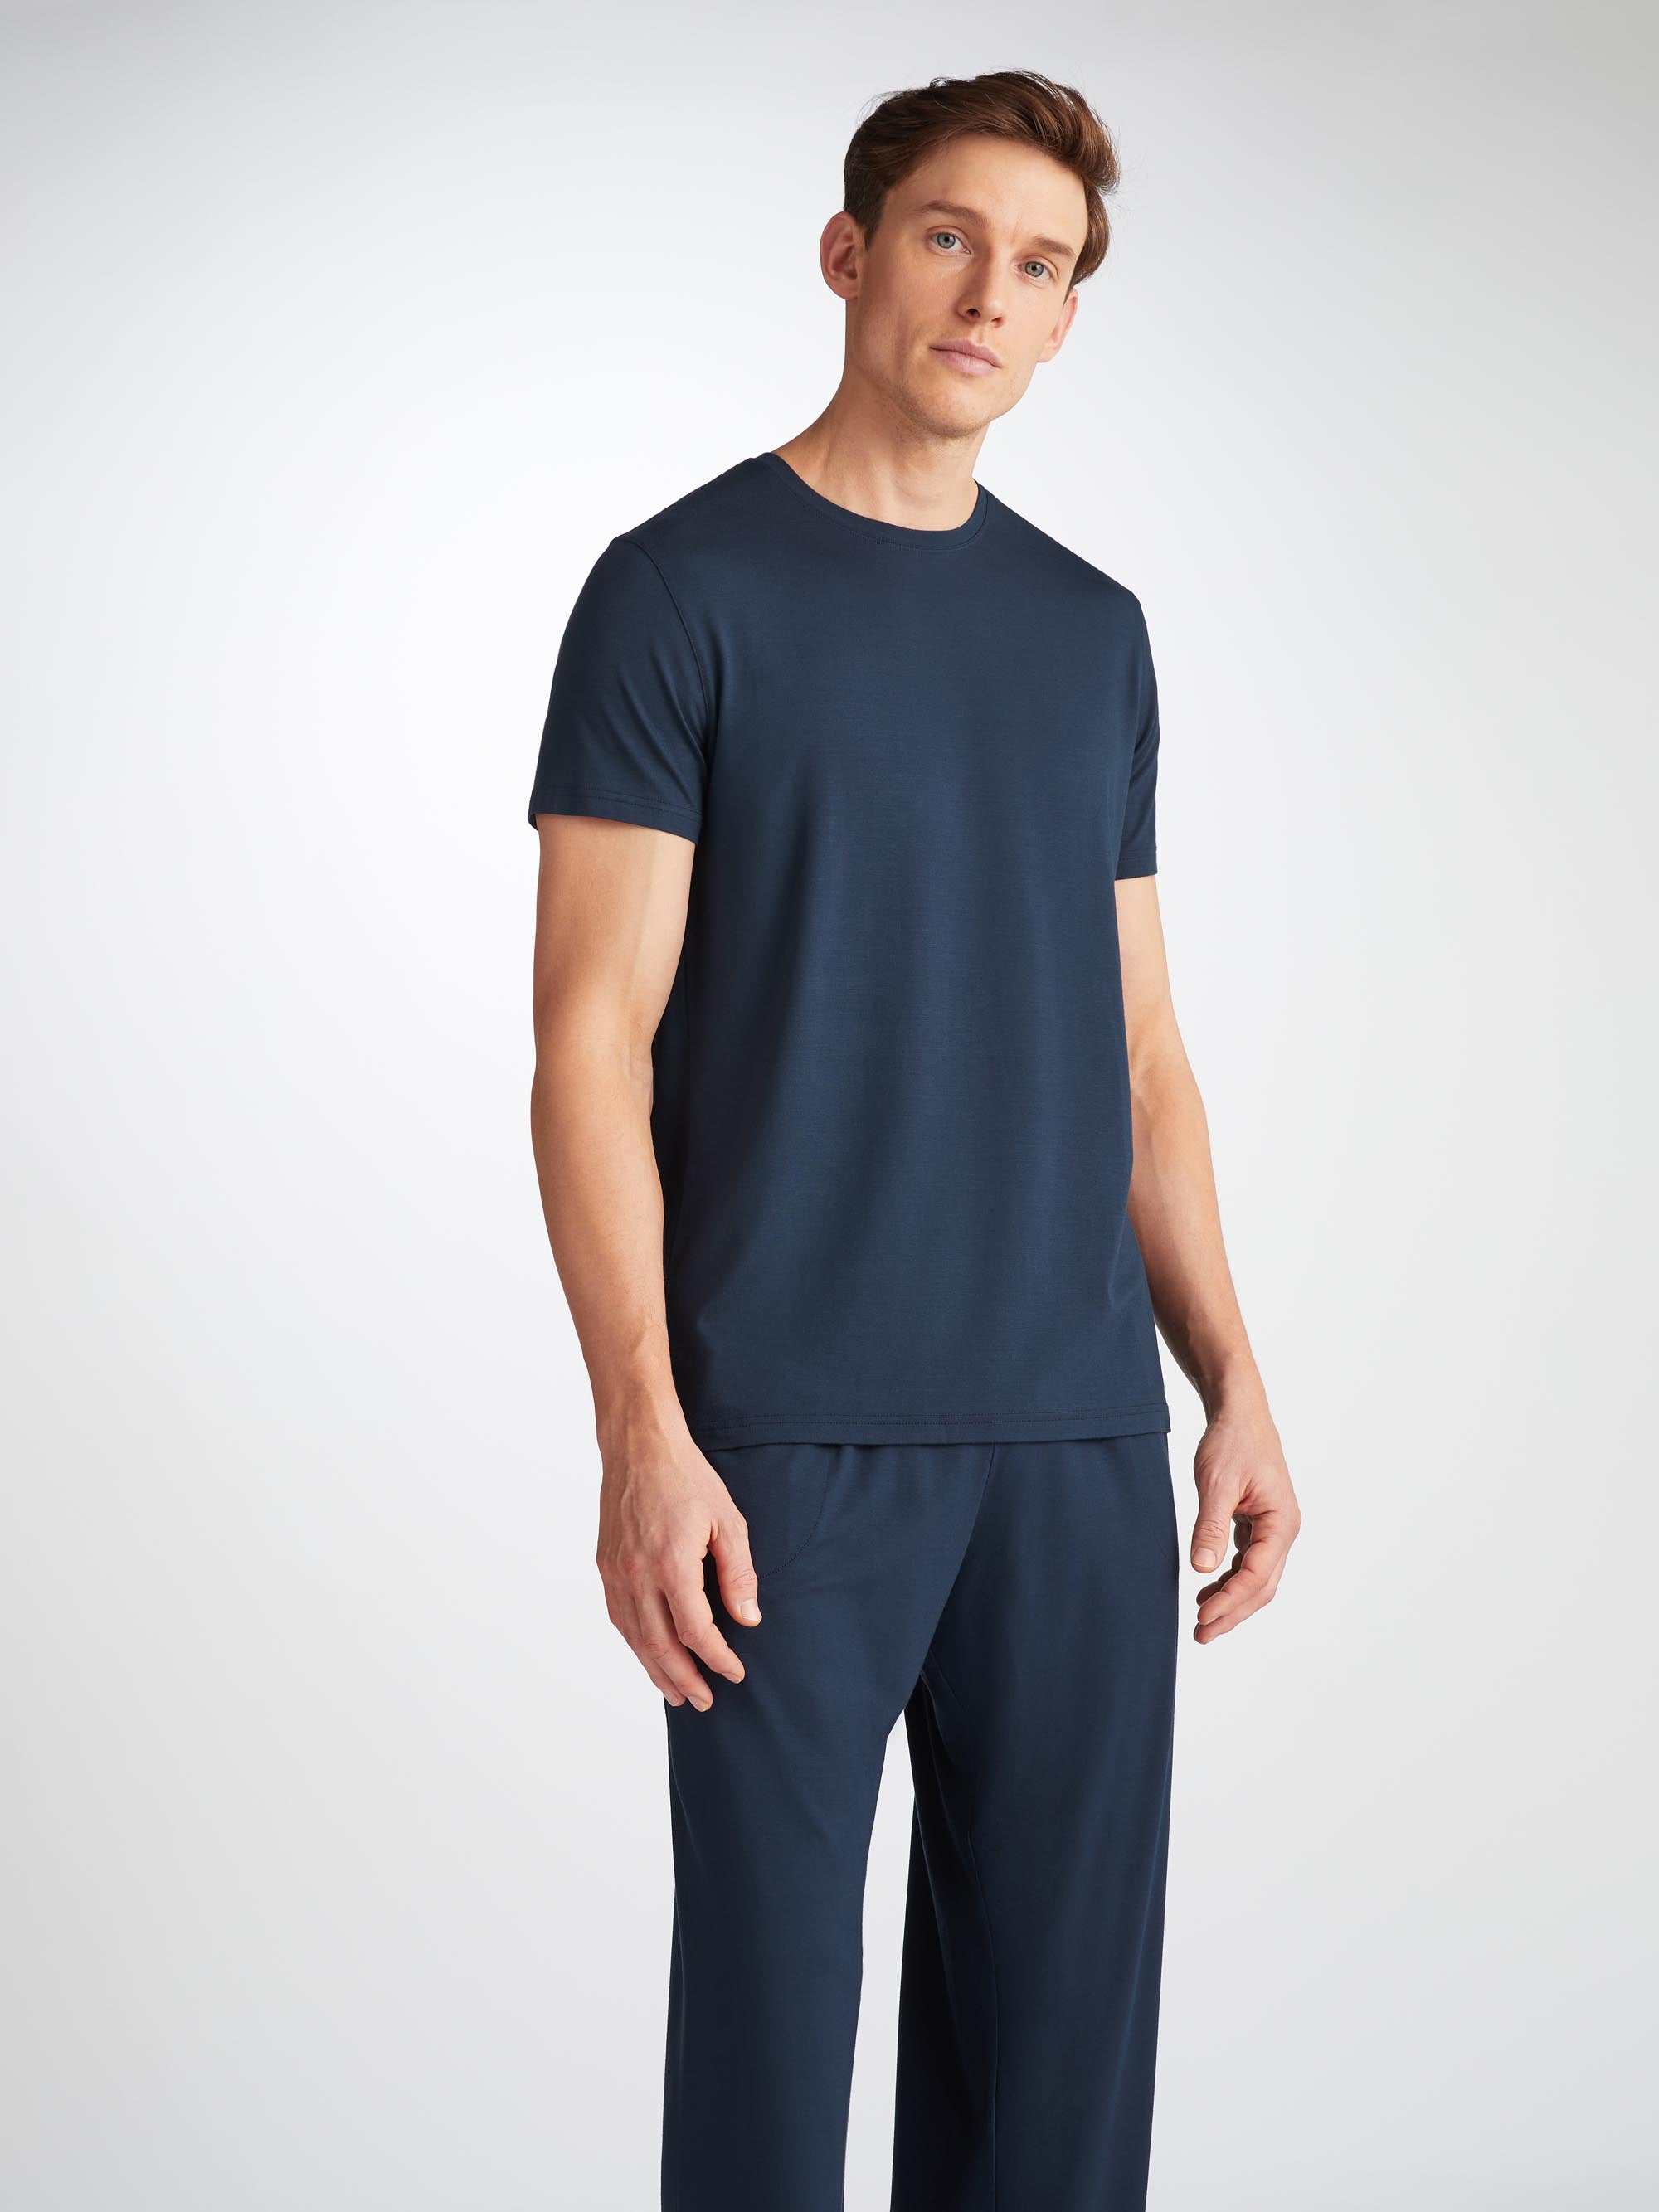 Men's T-Shirt Basel Micro Modal Stretch Navy